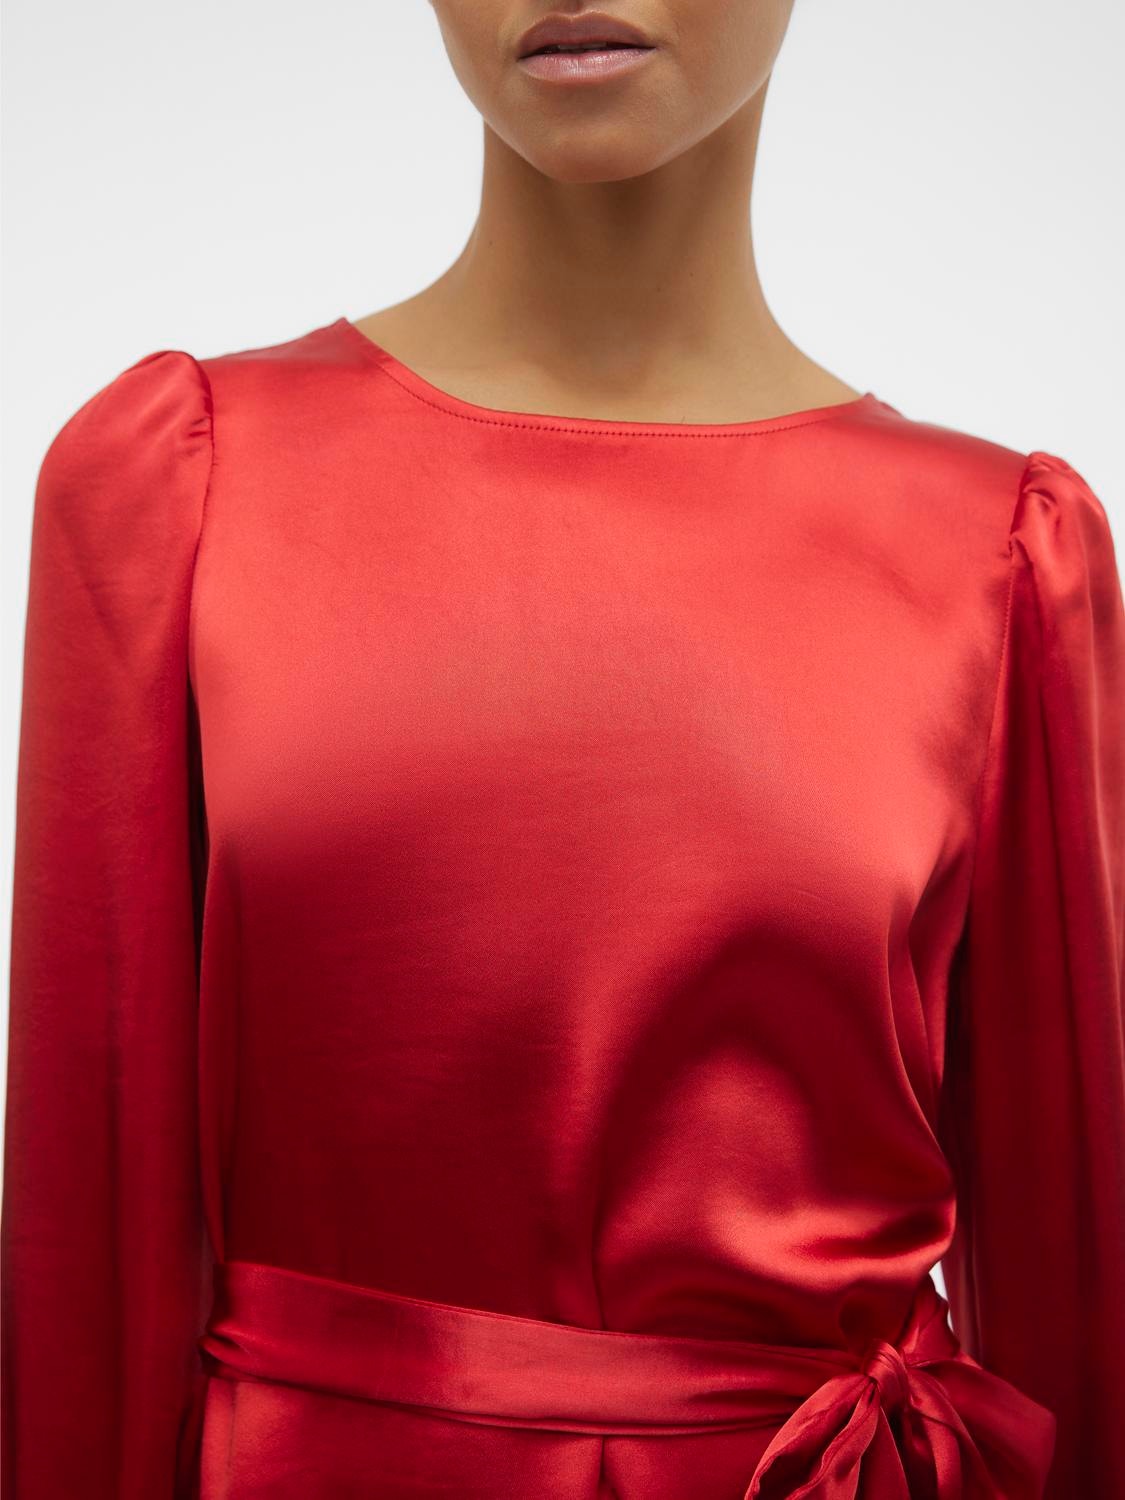 Vero Moda VMBEATRICE Kurzes Kleid -Scarlet Sage - 10298382